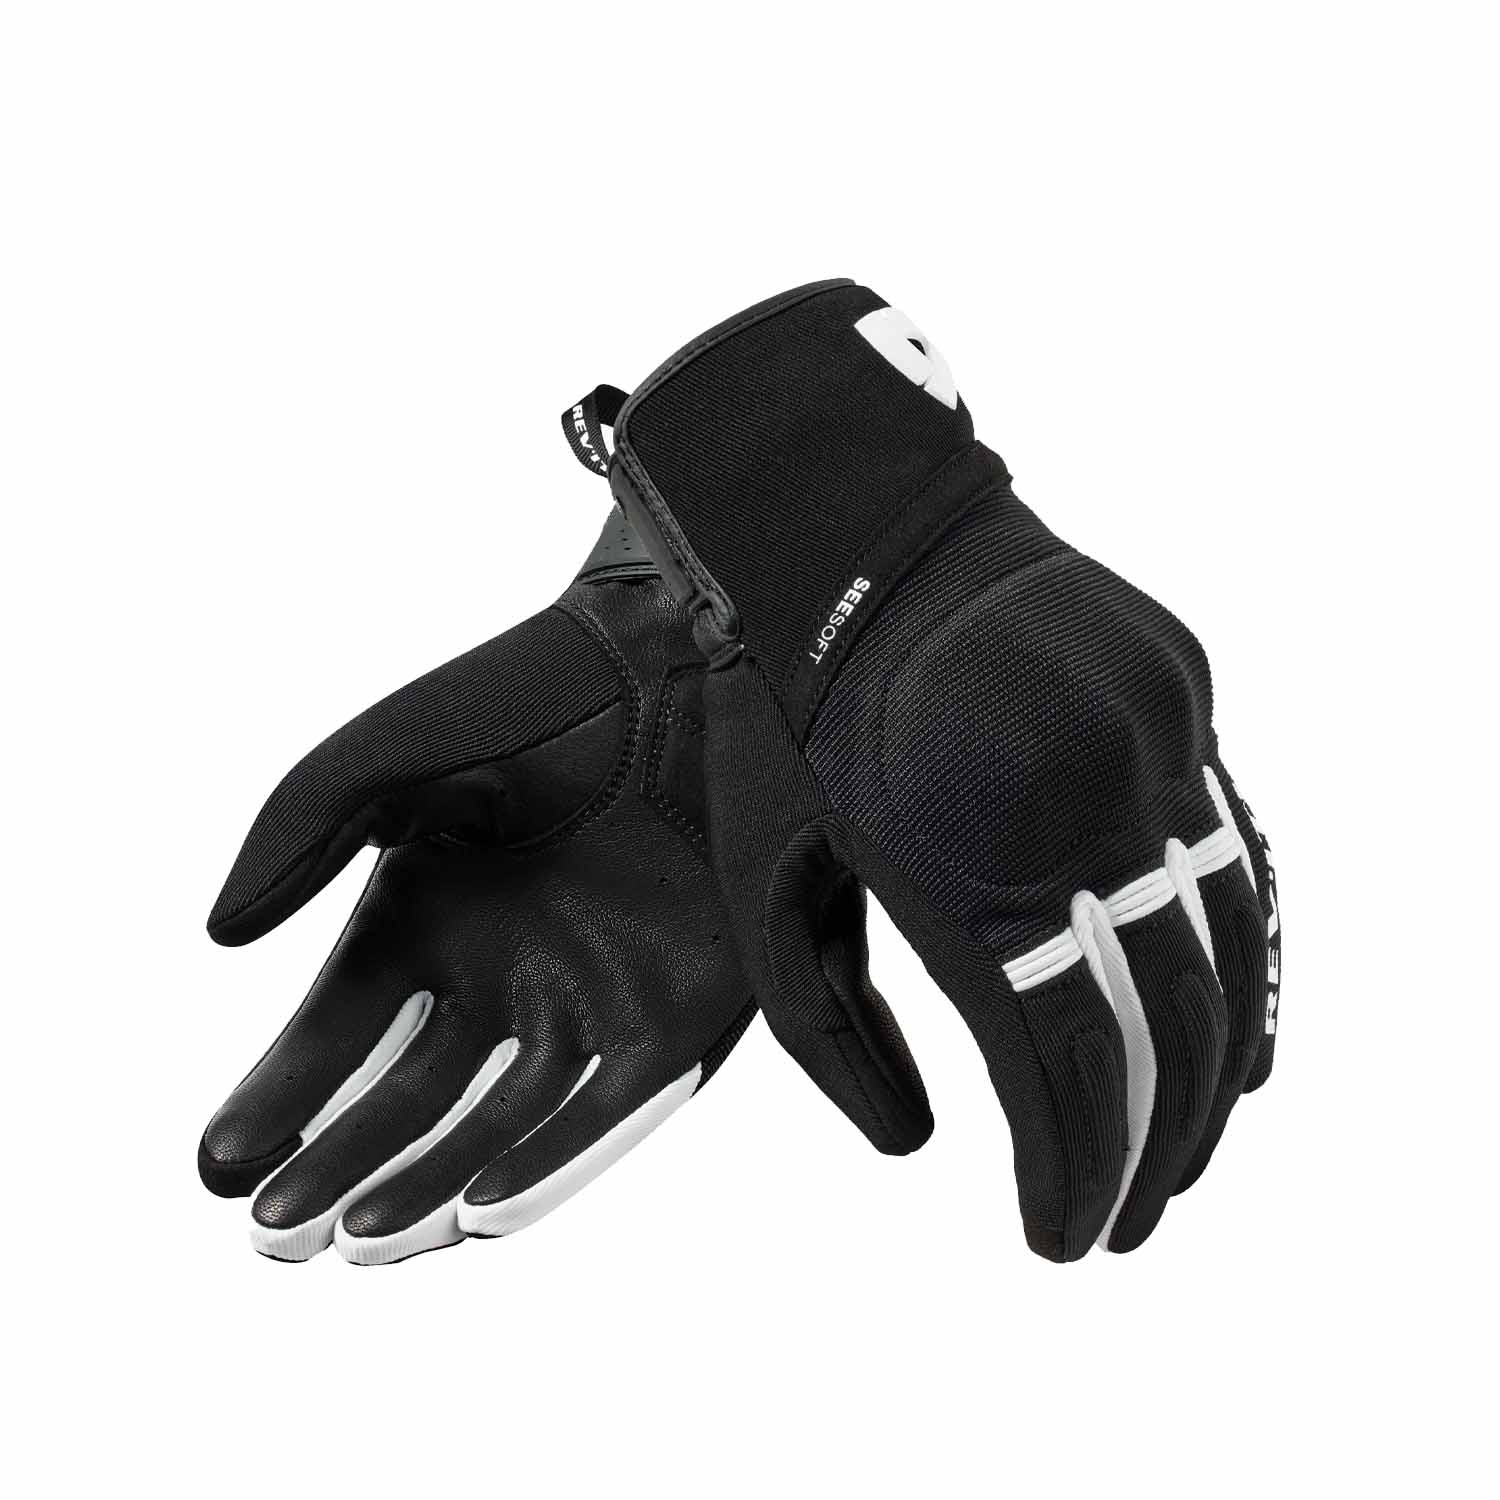 Image of REV'IT! Mosca 2 Gloves Black White Größe 2XL